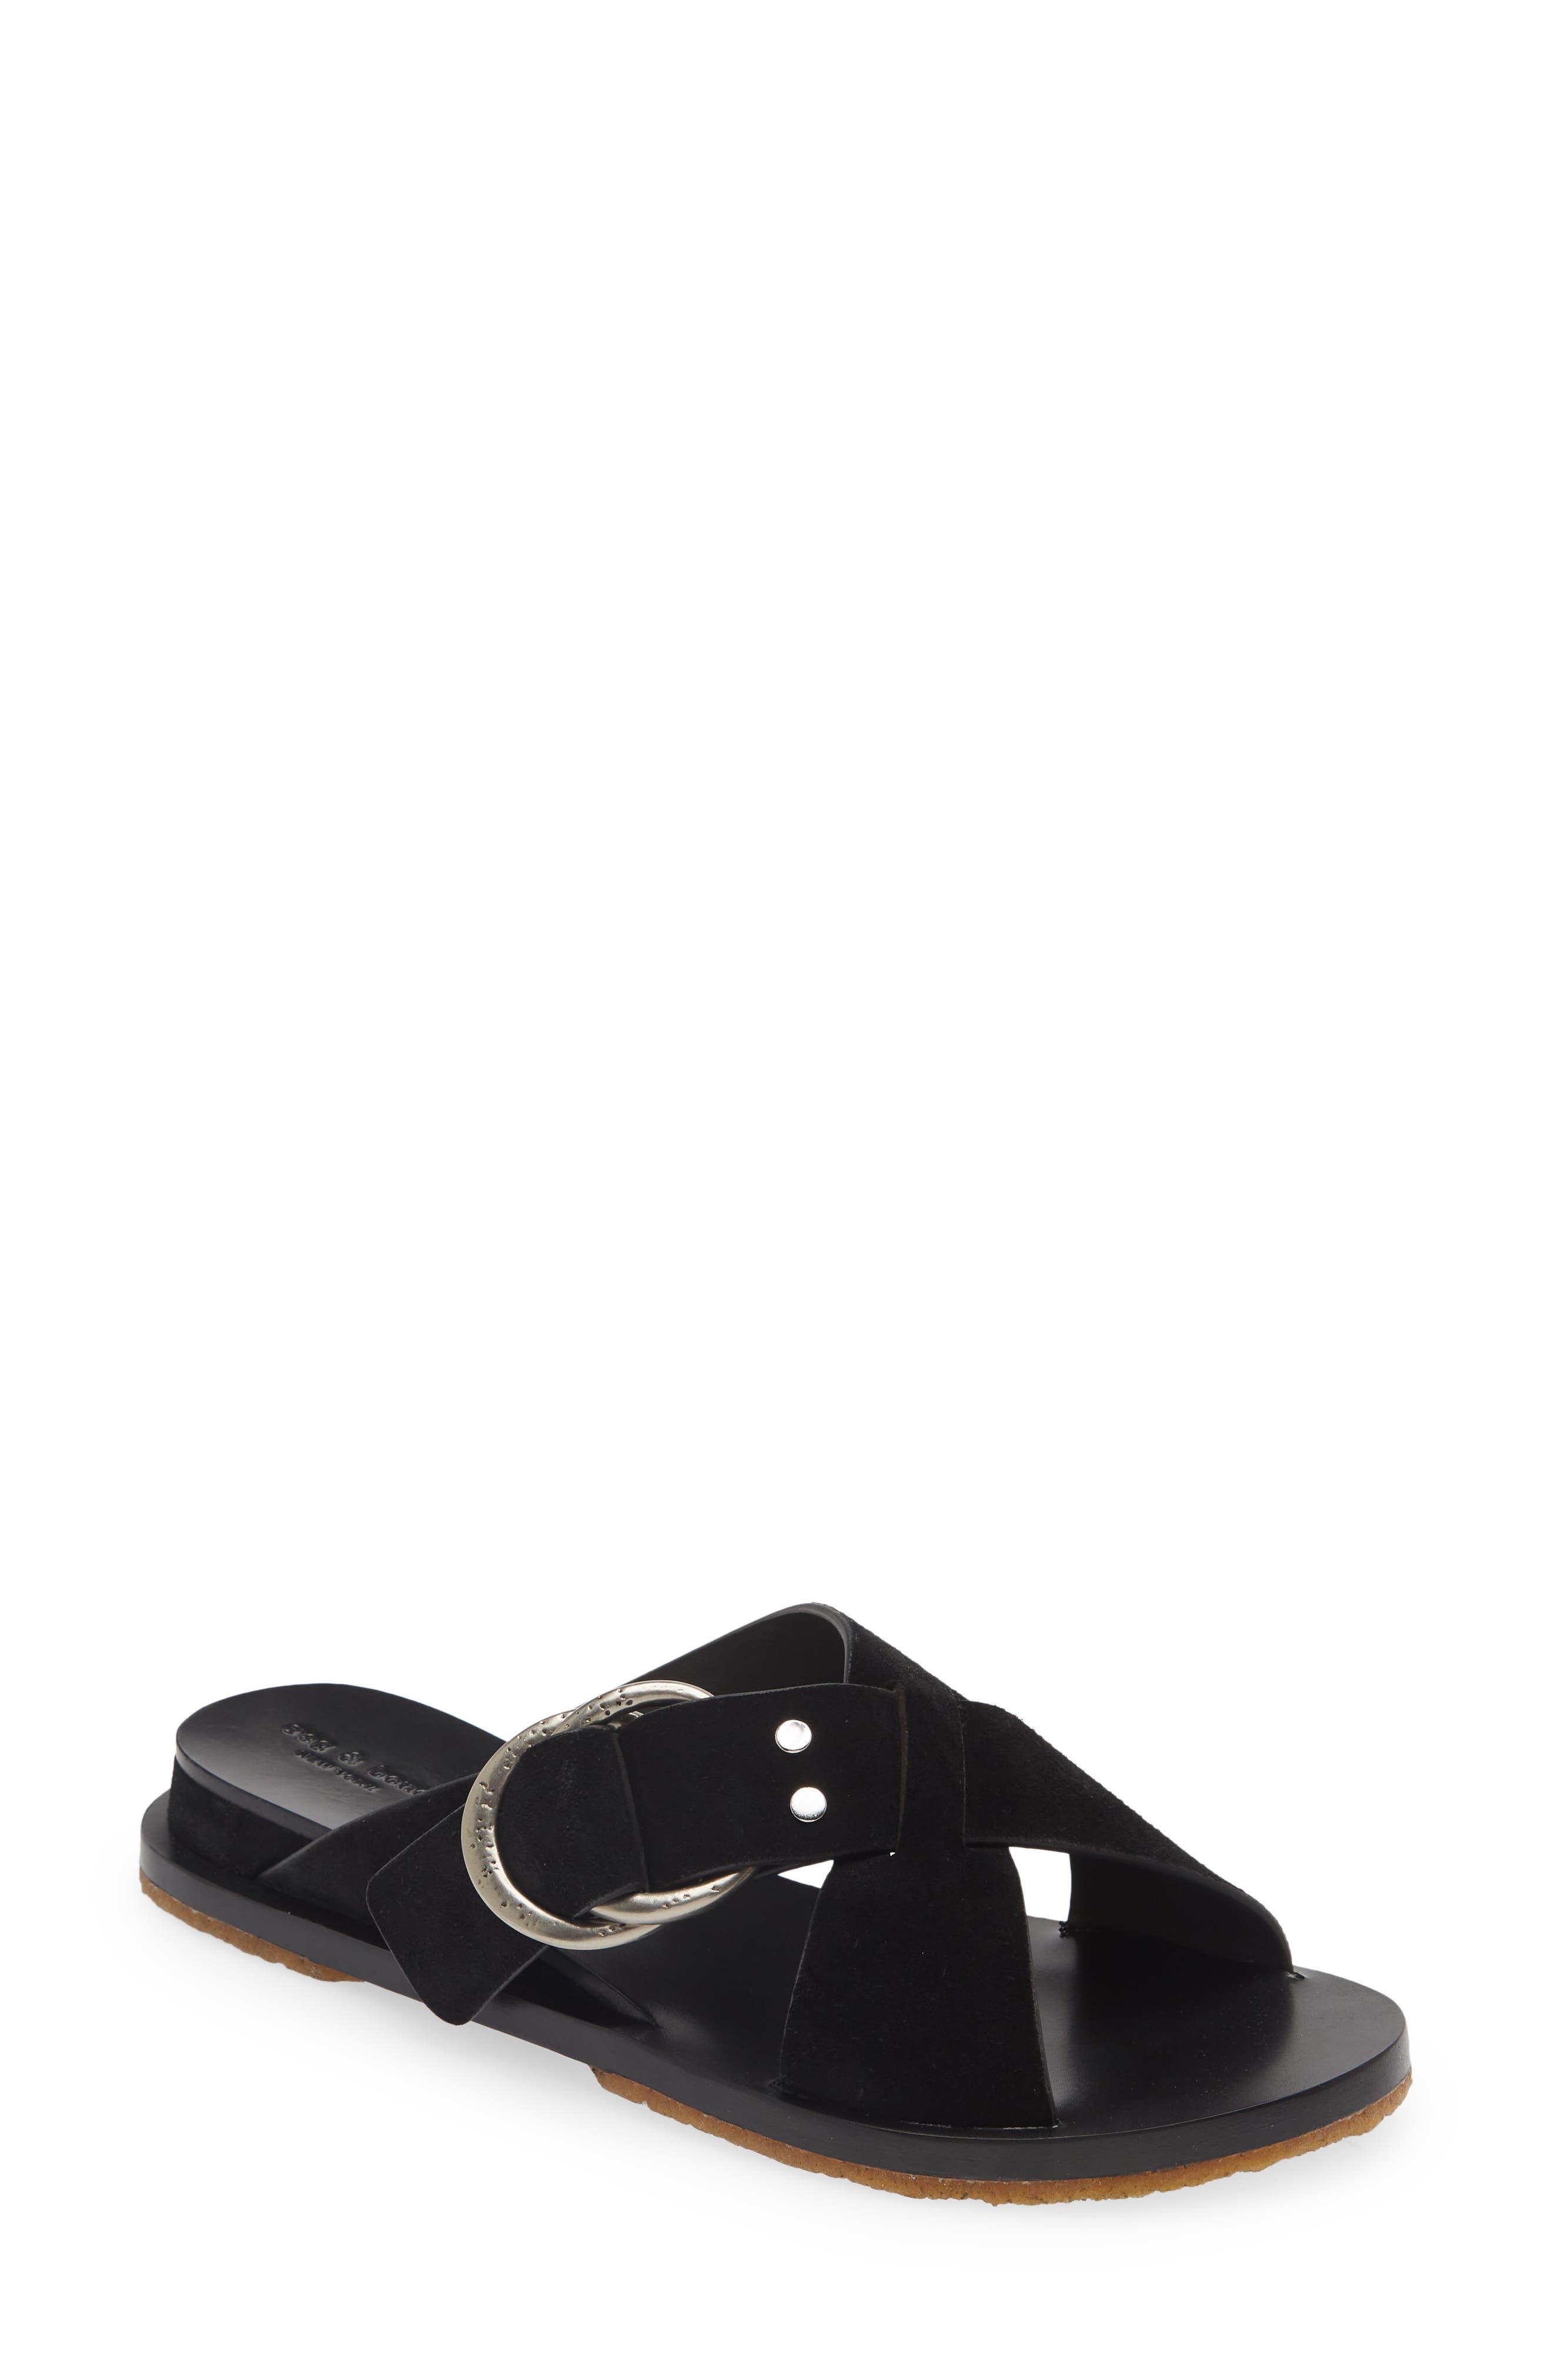 Rag & Bone Beau Slide Sandal in Black | Lyst